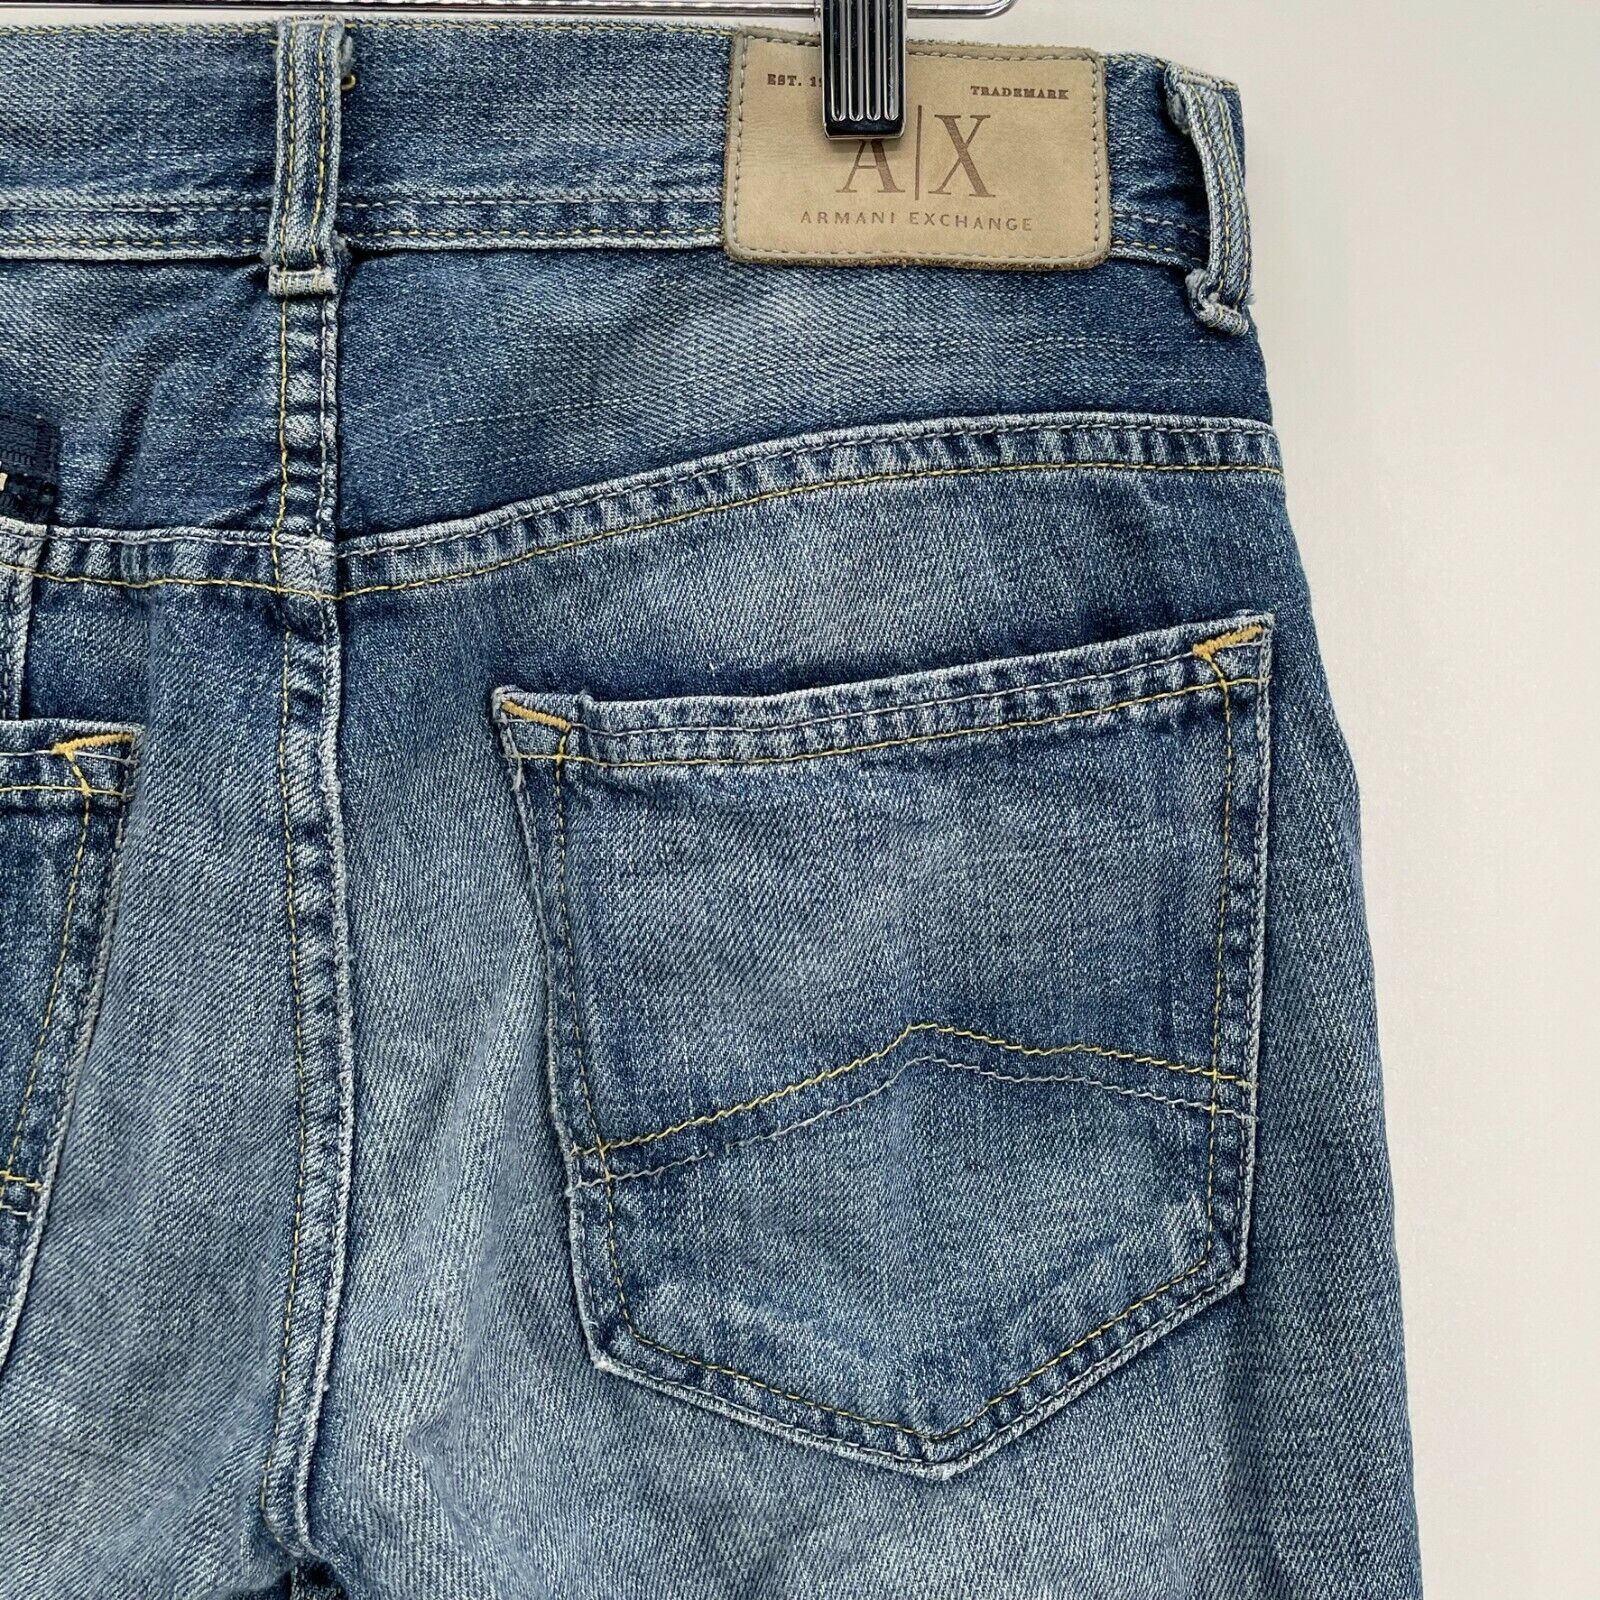 Armani Exchange Jeans Men's 28x30 Blue Medium Wash Denim Made in USA